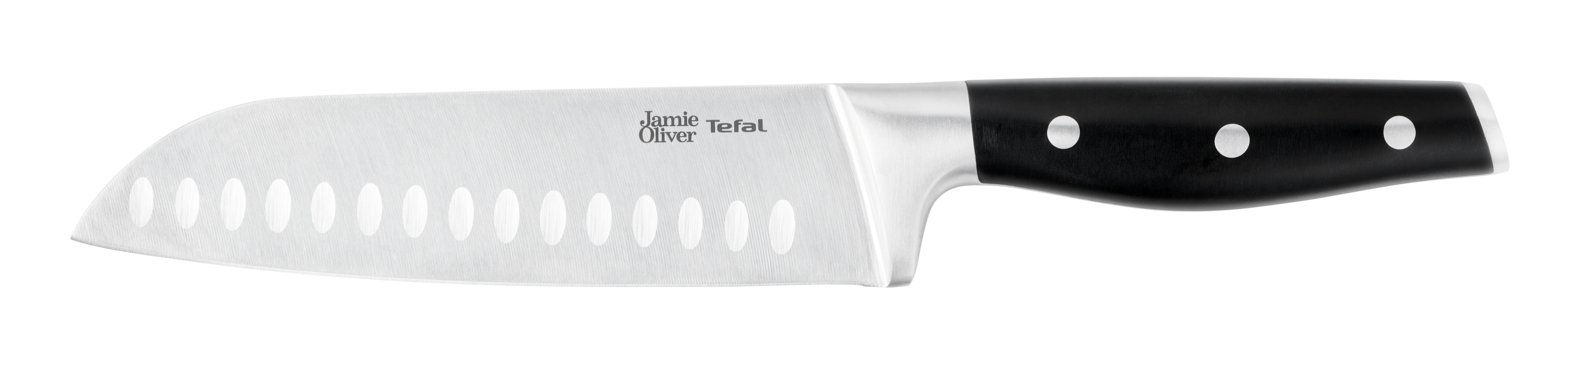 Нож сантоку Jamie Oliver 18 см K2671844 нож для чистки овощей jamie oliver 9 cм k2671144